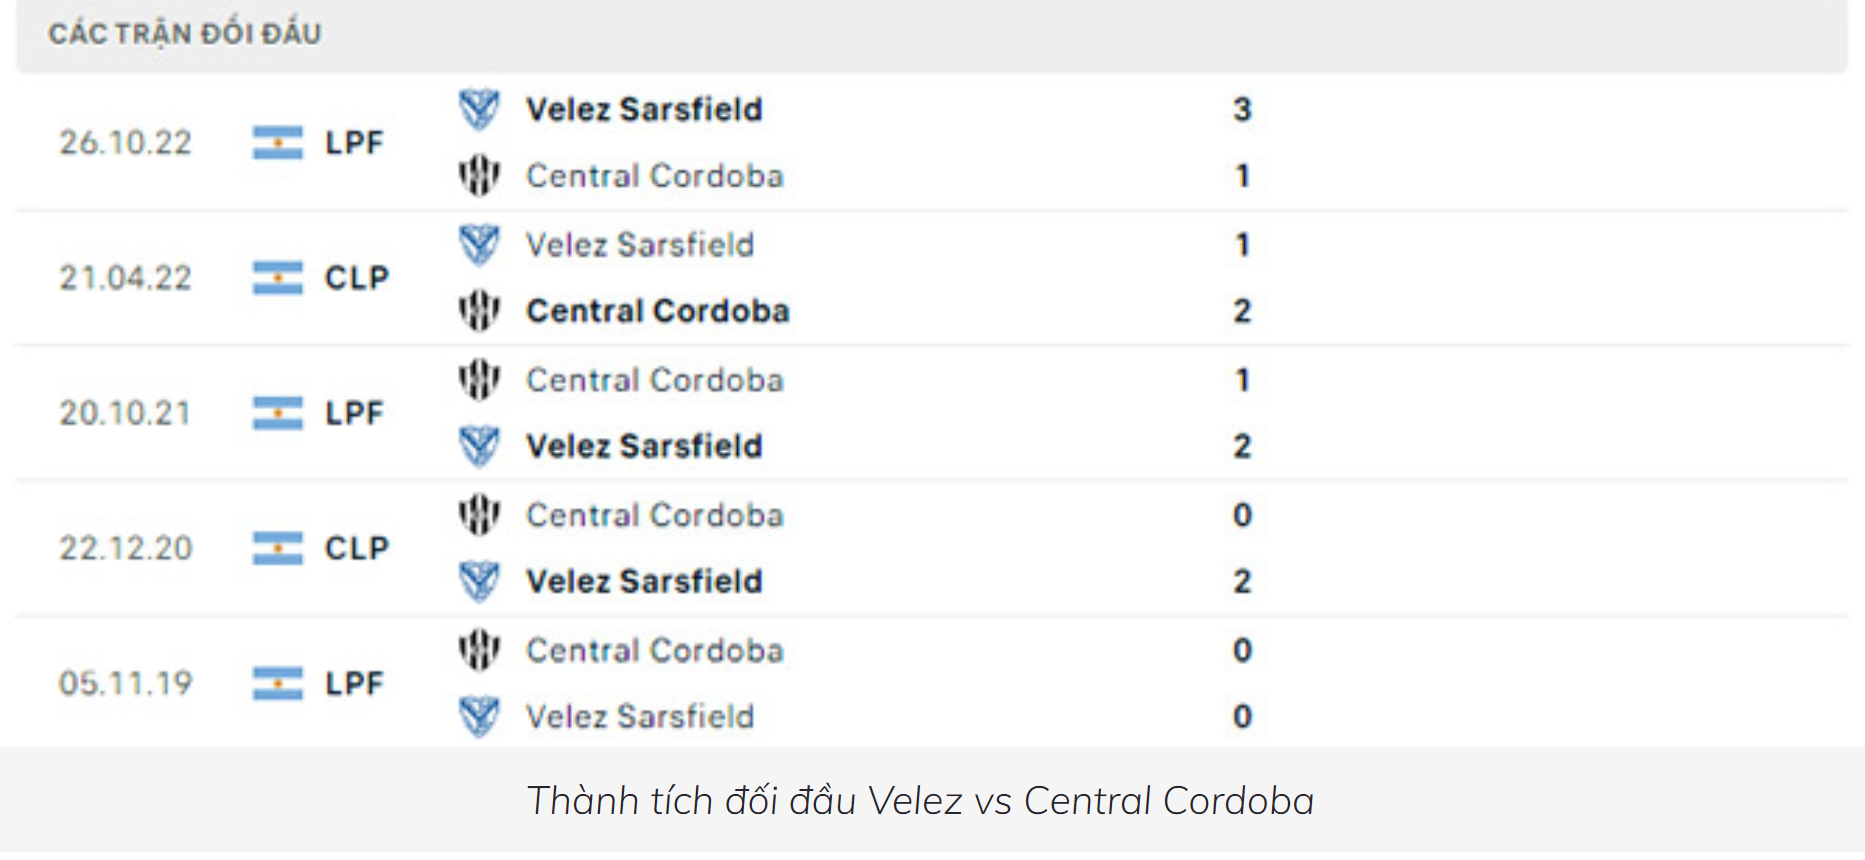 Kết quả lịch sử đối đầu Velez Sarsfield vs Central Cordoba de Santiago